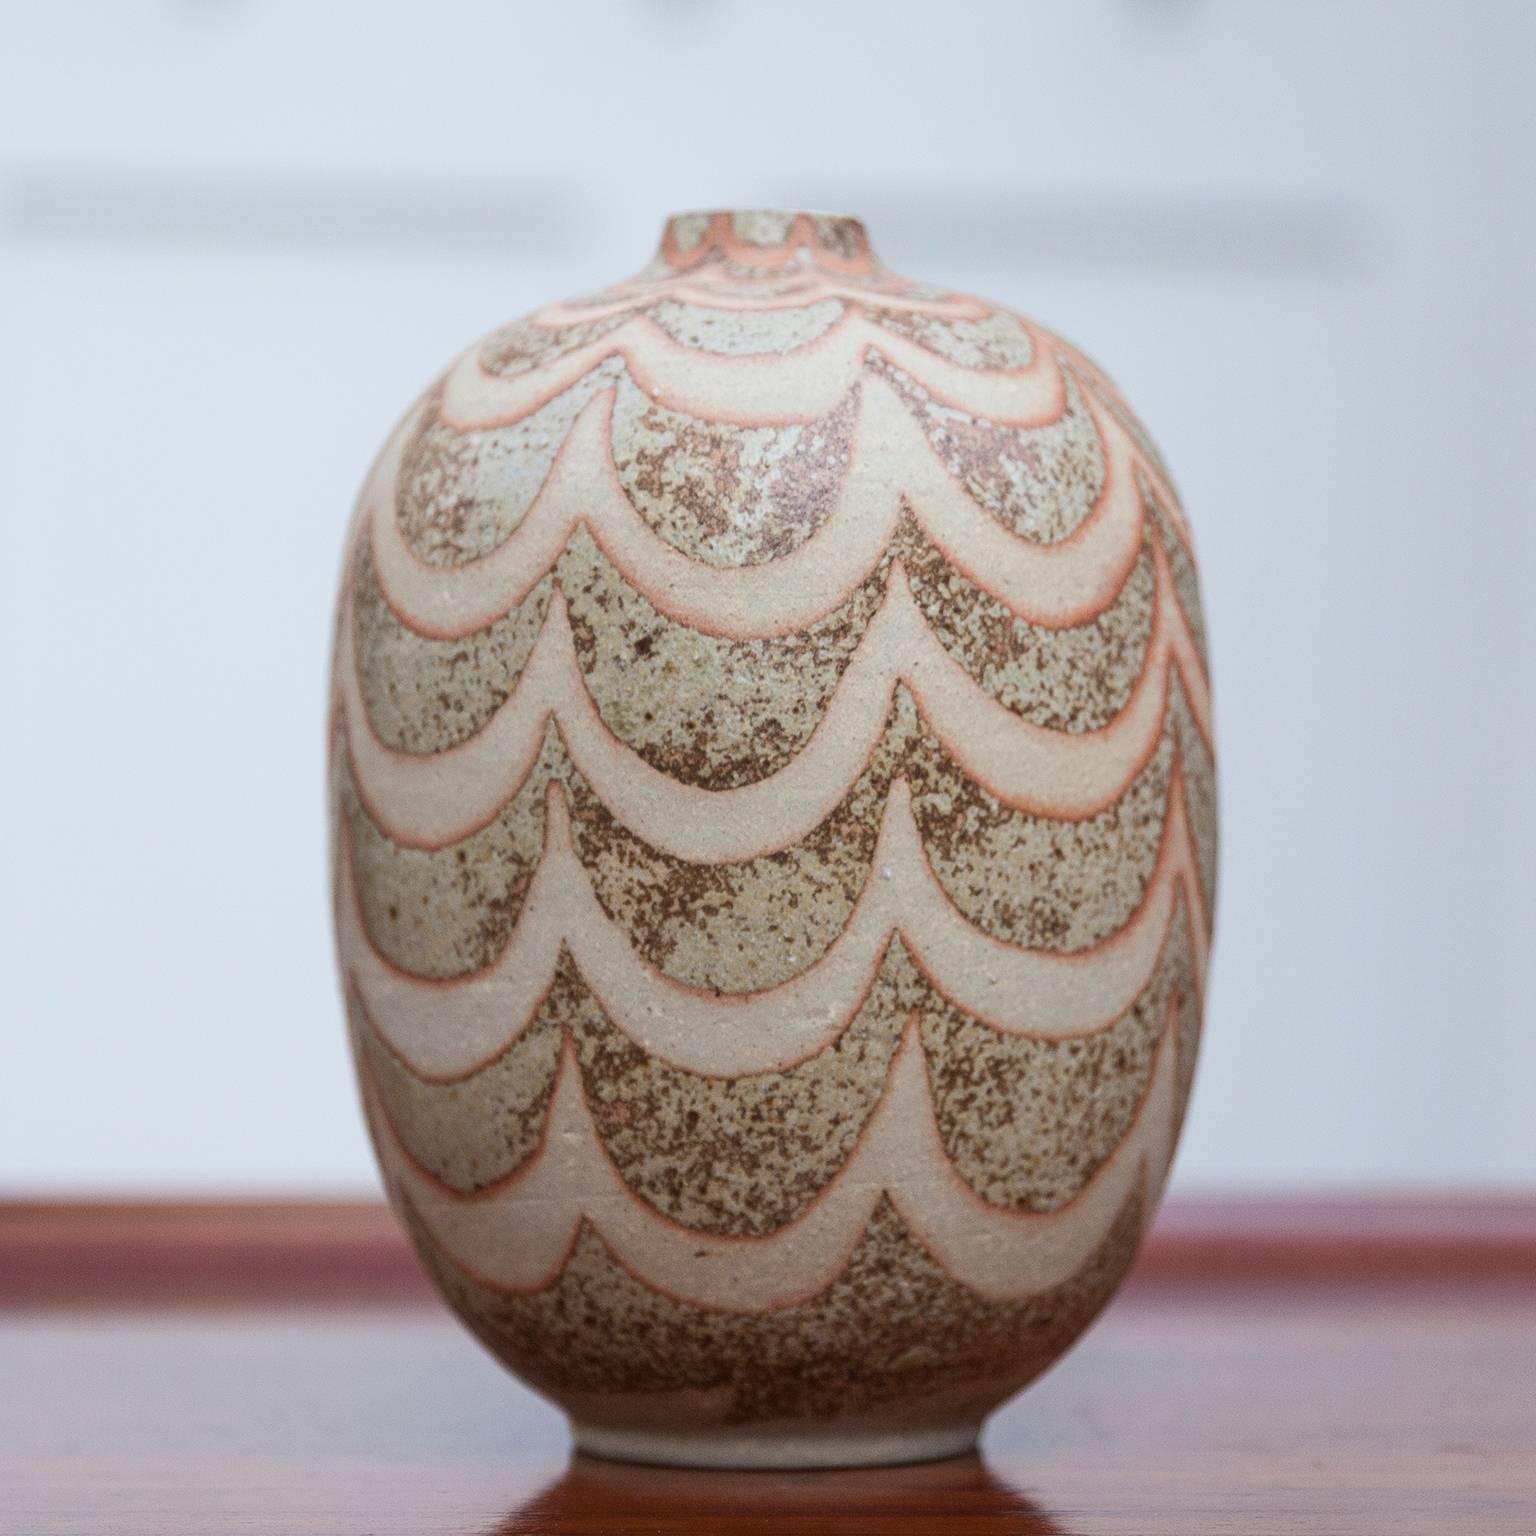 Fantastic unique stoneware Uzumaki vase, partially unglazed using a wax-resist
method, with matte brown and beige red glaze, 1991.